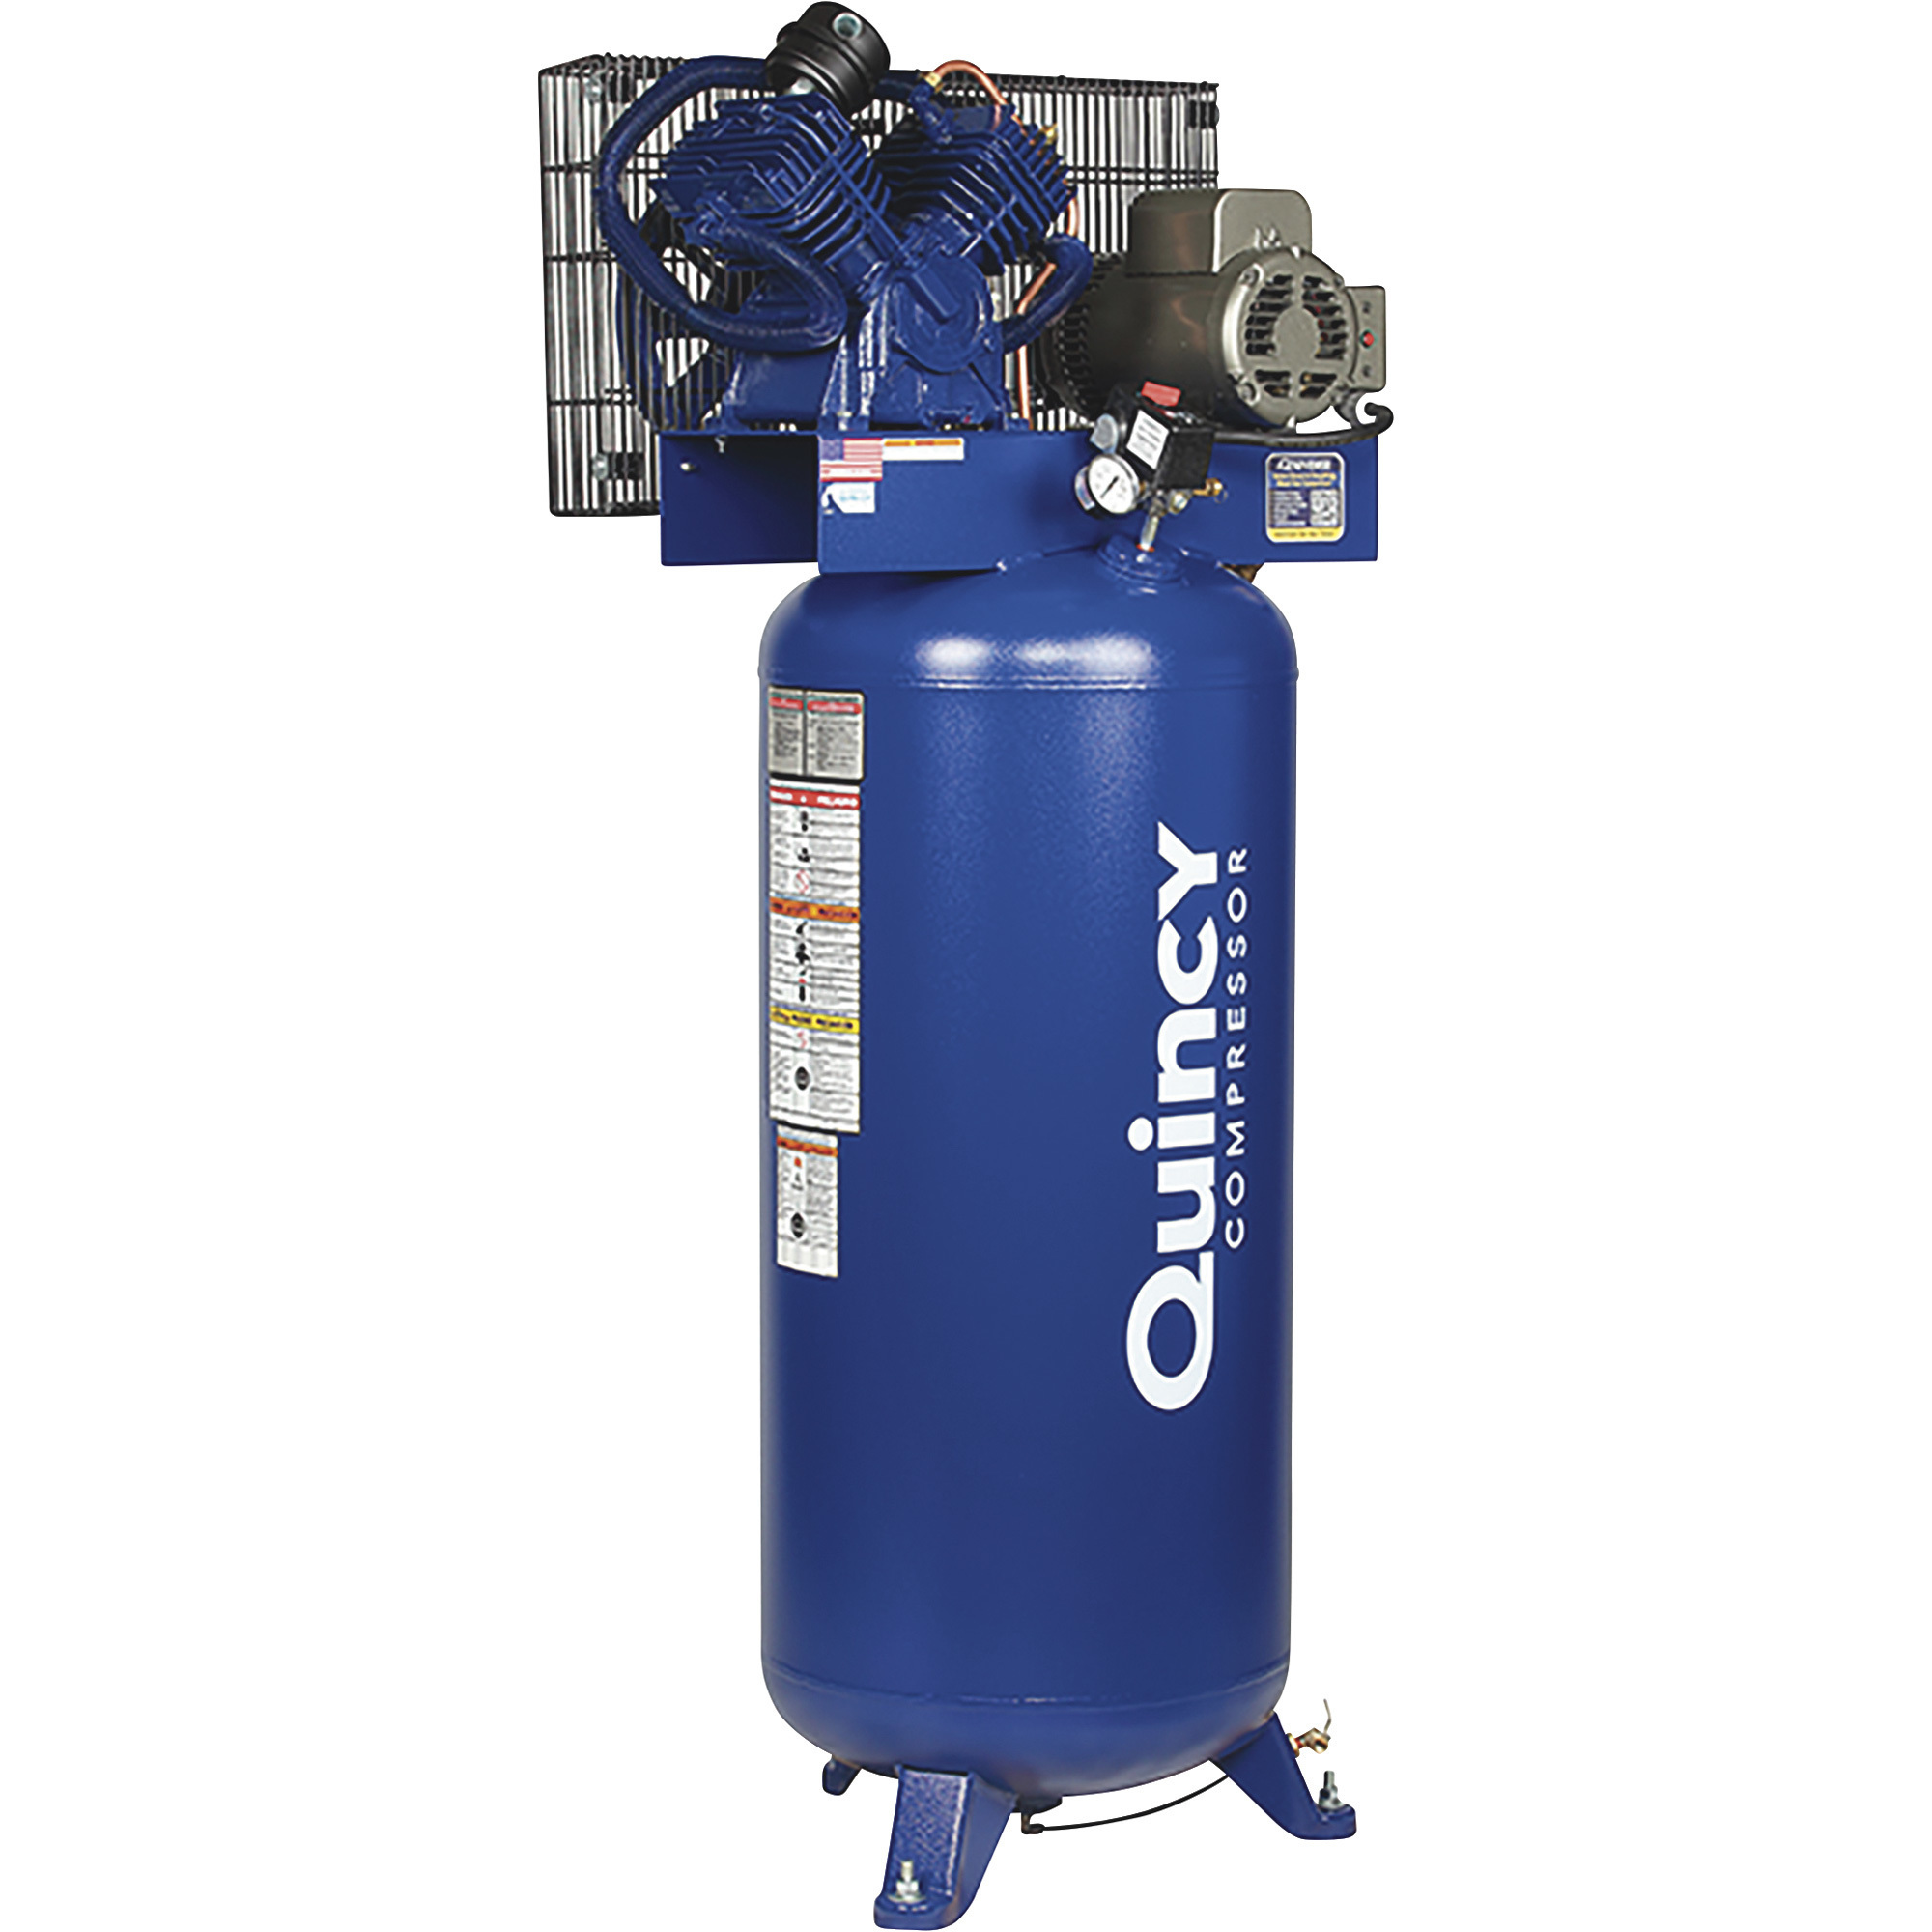 Quincy QT-54 Reciprocating Air Compressor - 5 HP, 230 Volt, 1 Phase, 60-Gallon Vertical, Splash Lubricated, Model# 2V41C60VC